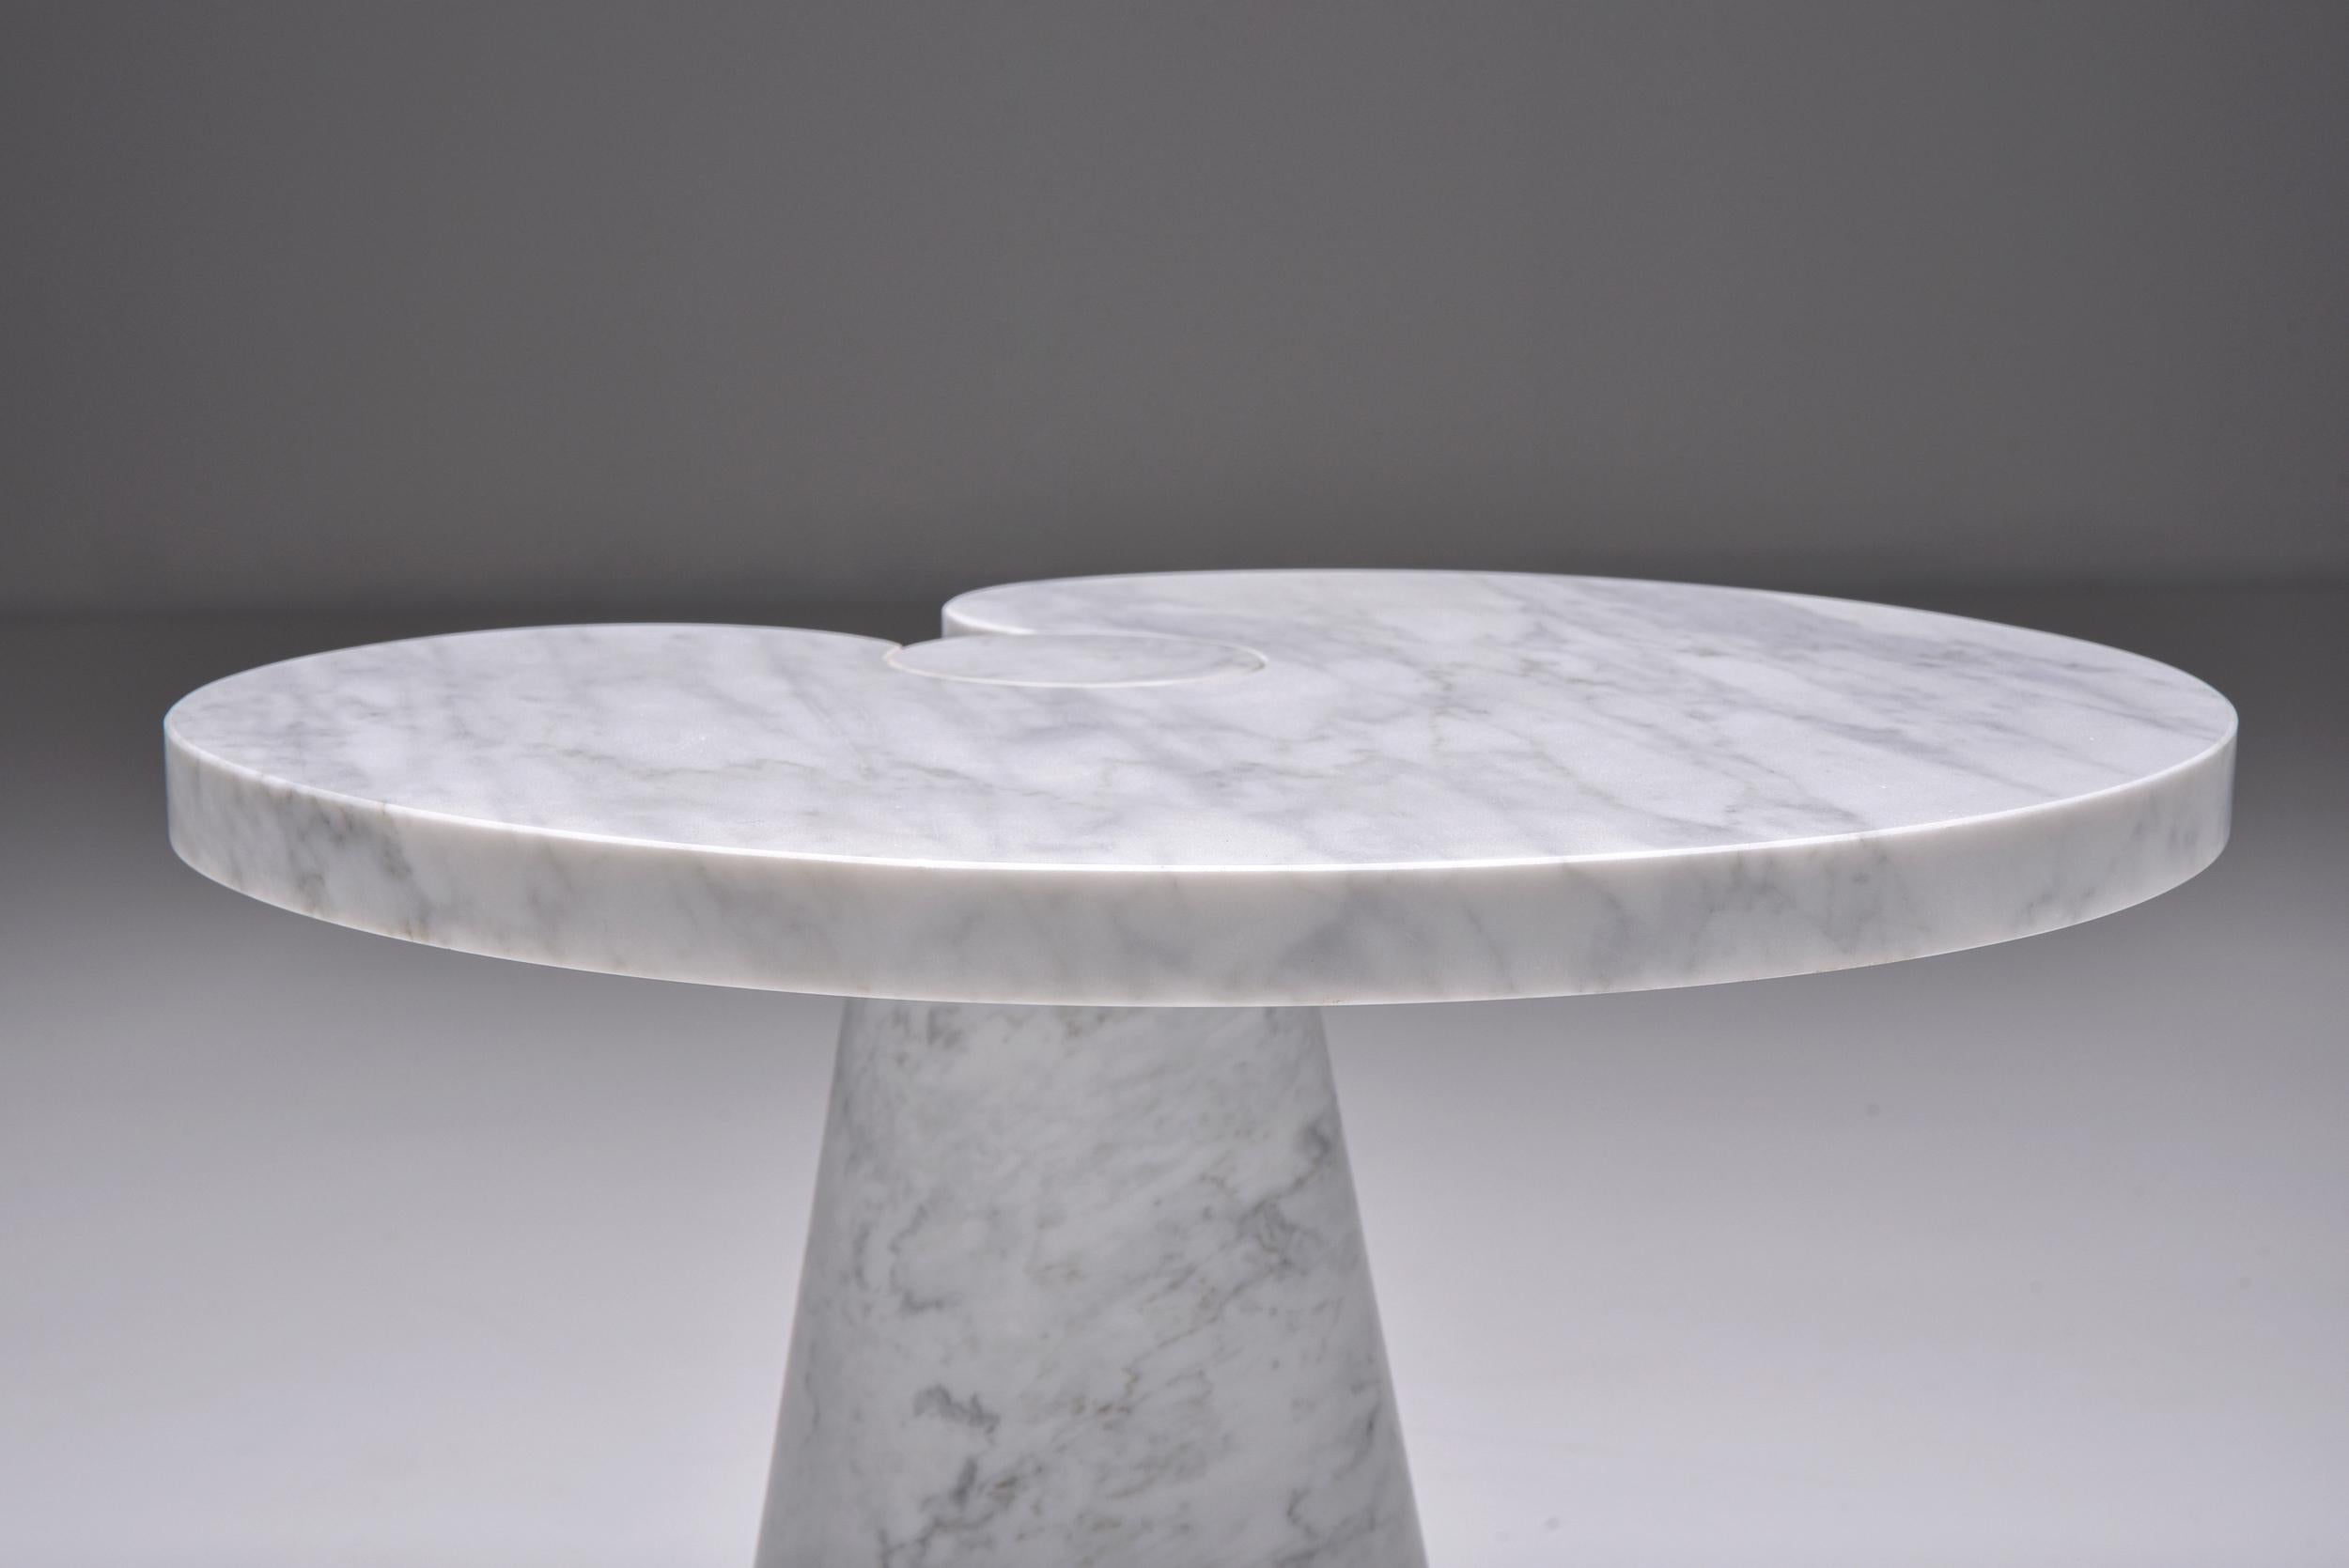 Mangiarotti Carrara Marble Side Table 'Eros series' for Skipper, Italian design 2